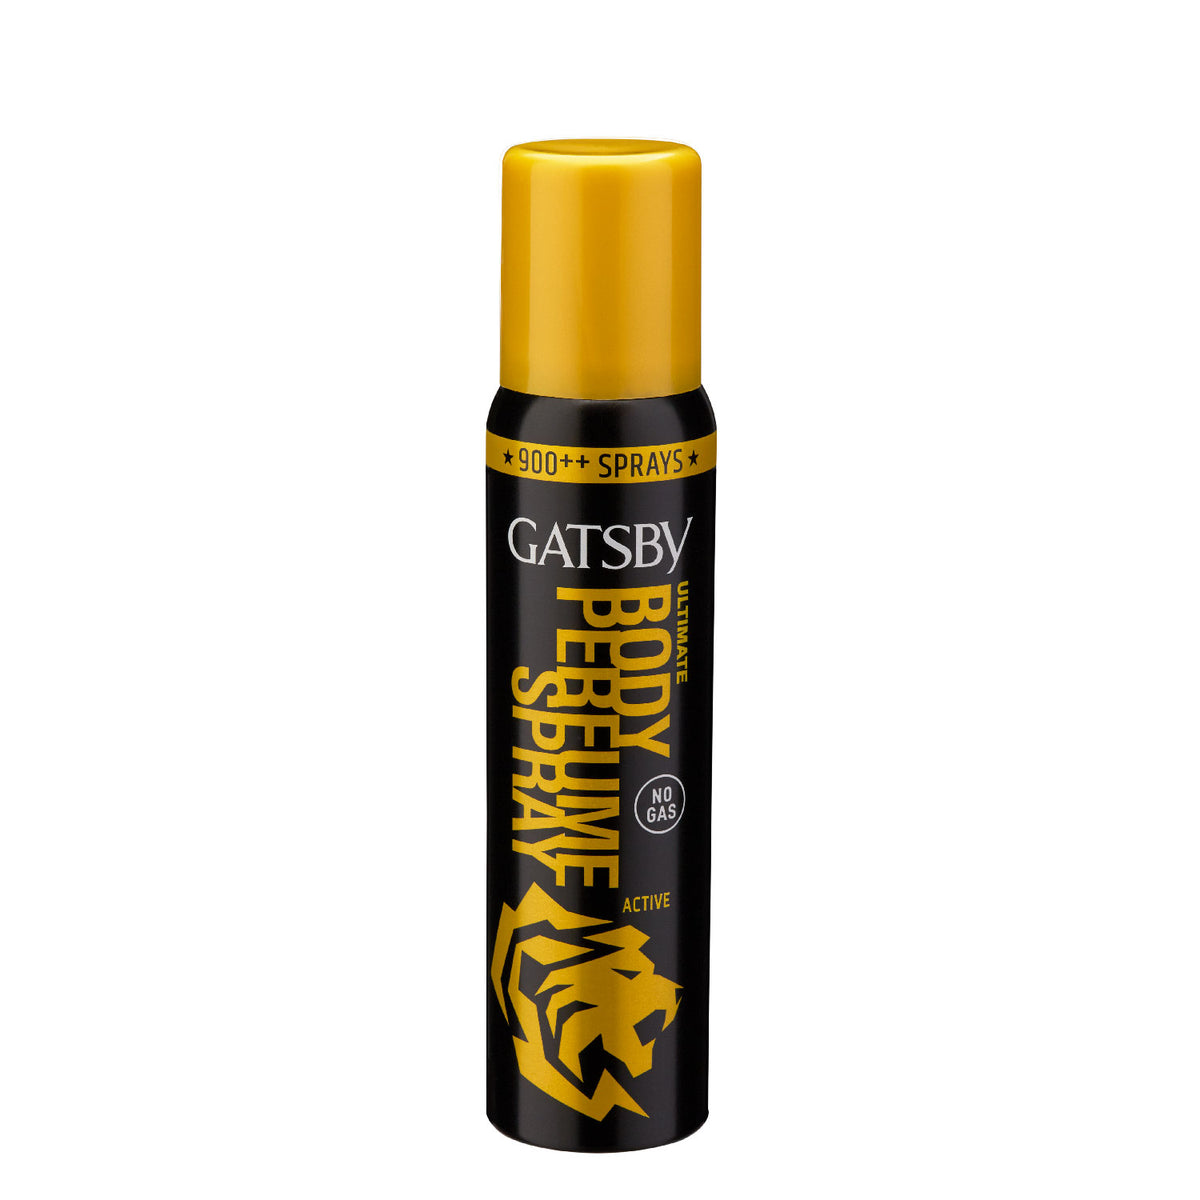 Gatsby Ultimate Body Perfume Spray - Active, 120 ml : Buy 1 Get 1 Free! Gardenia Cosmotrade LLP